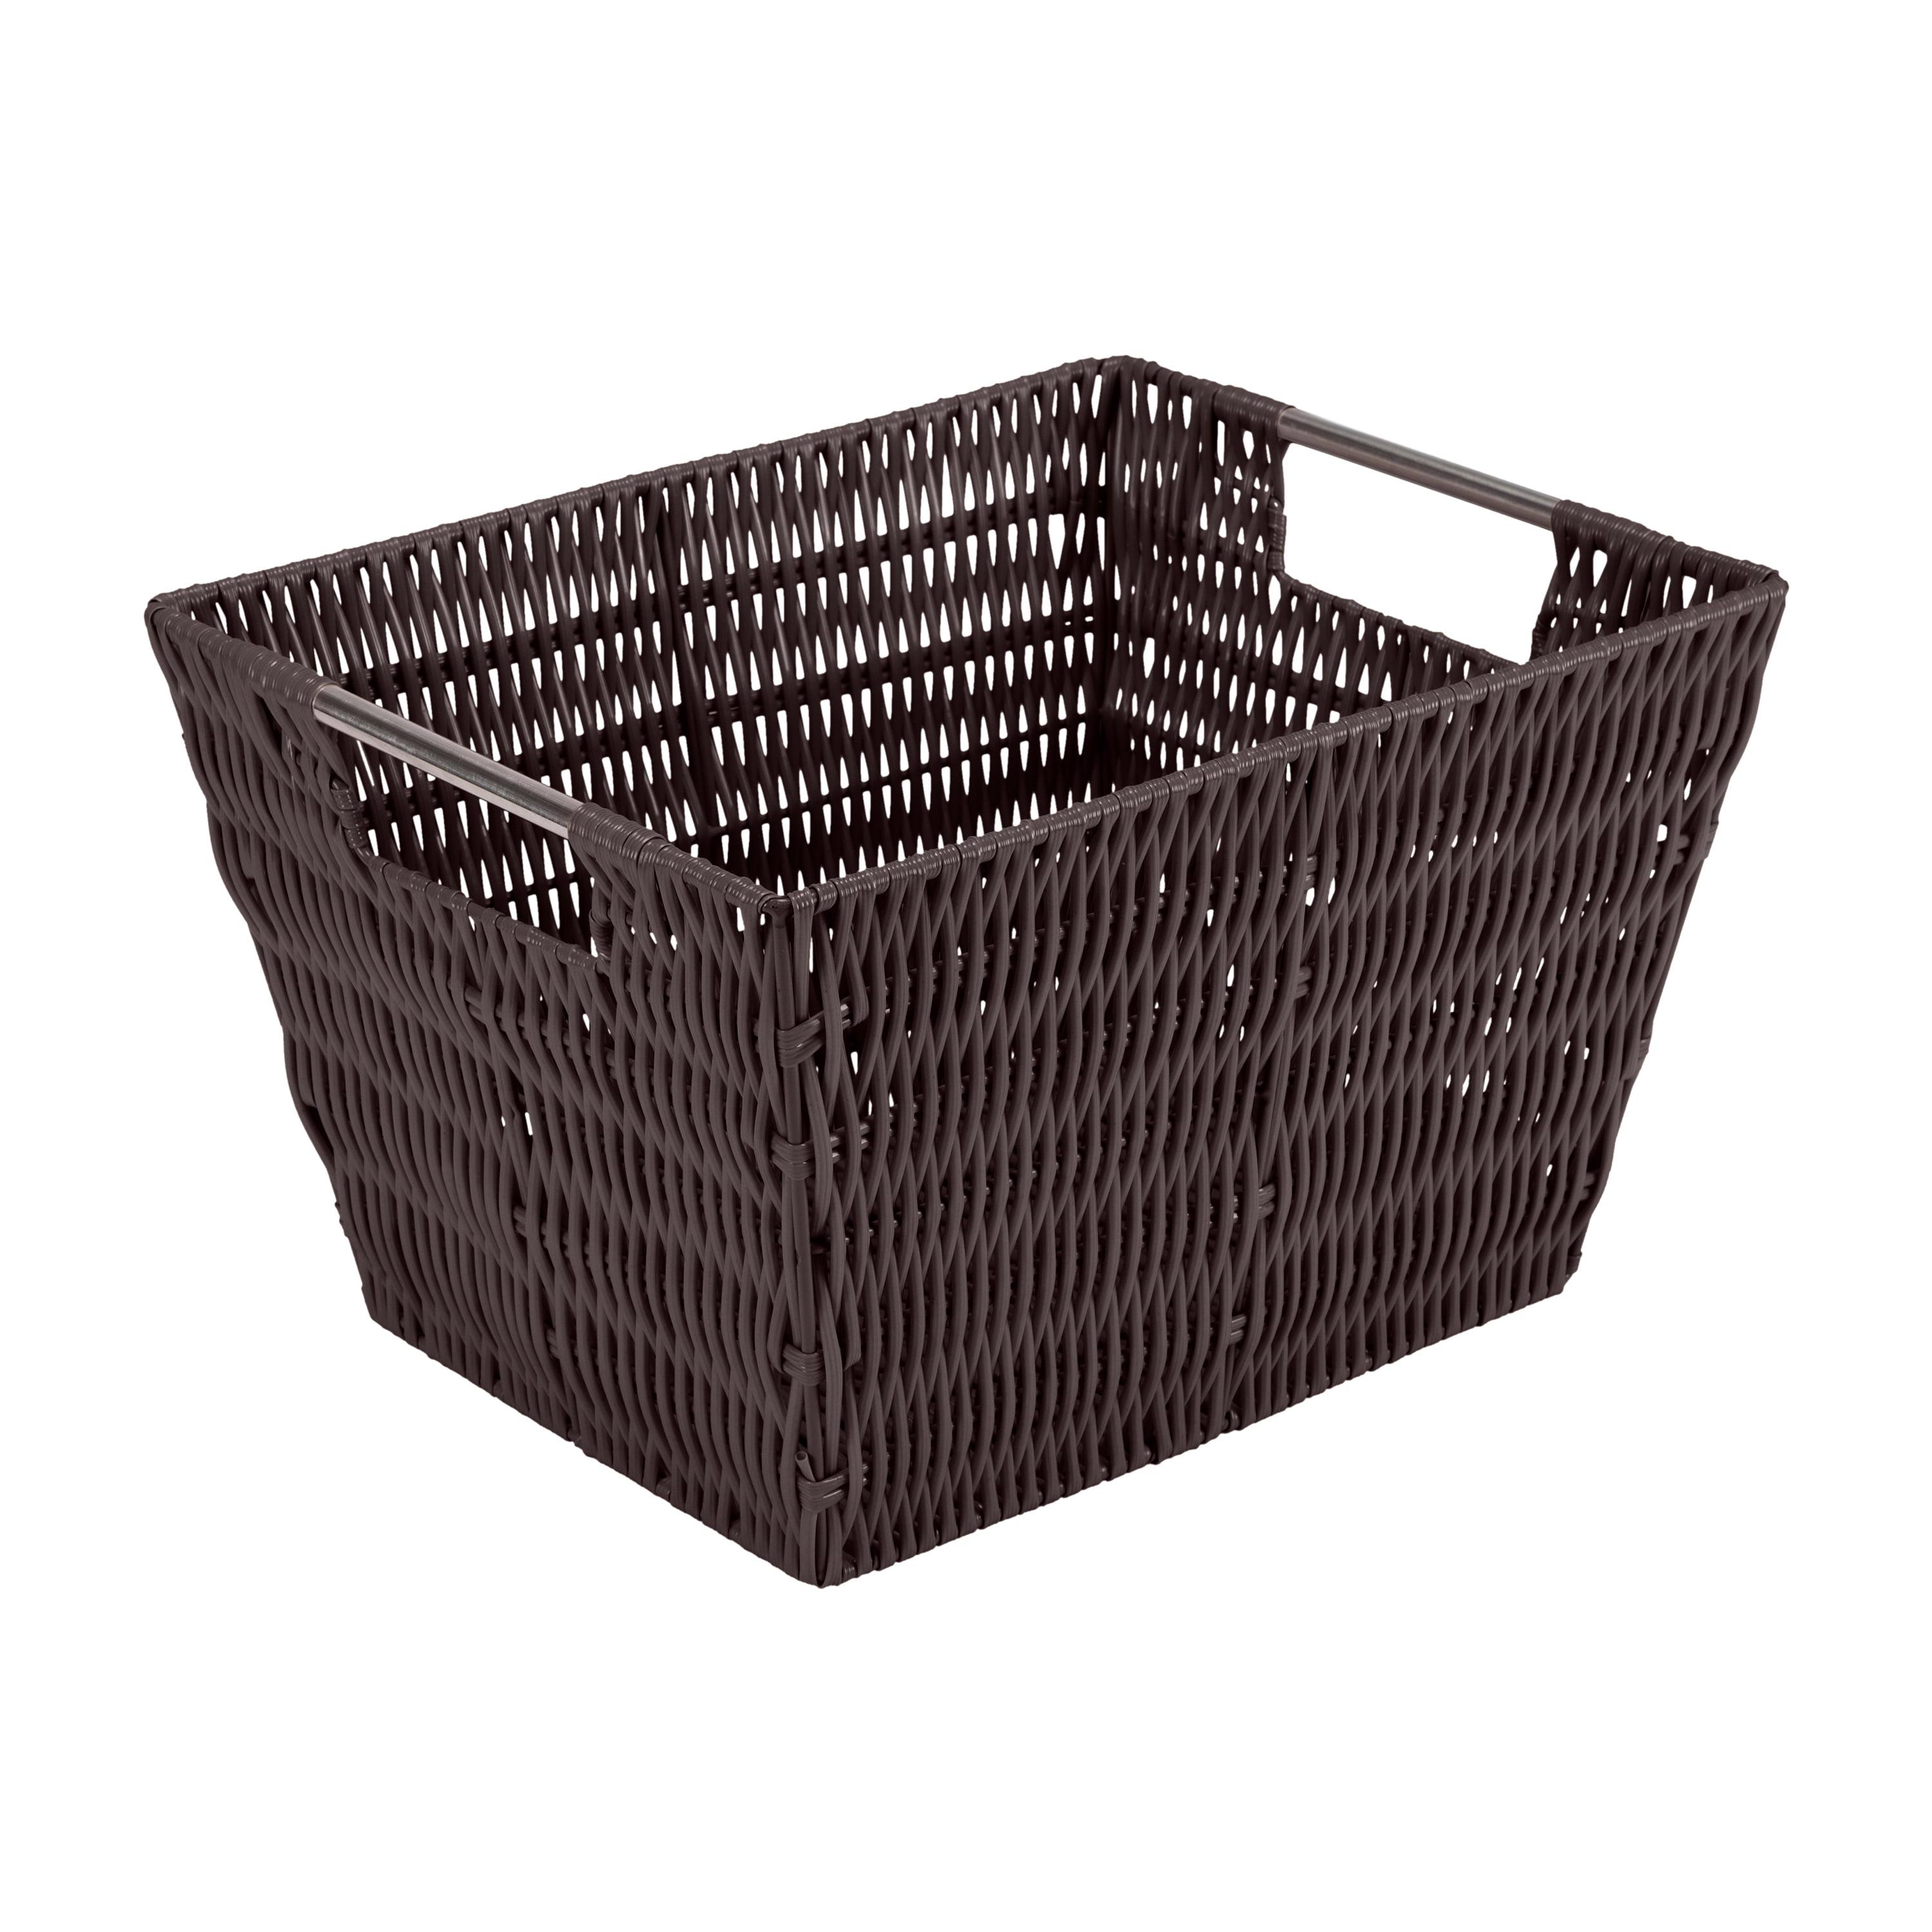 Rectangular Rattan Storage Basket with Stainless Steel Handles - Chocolate